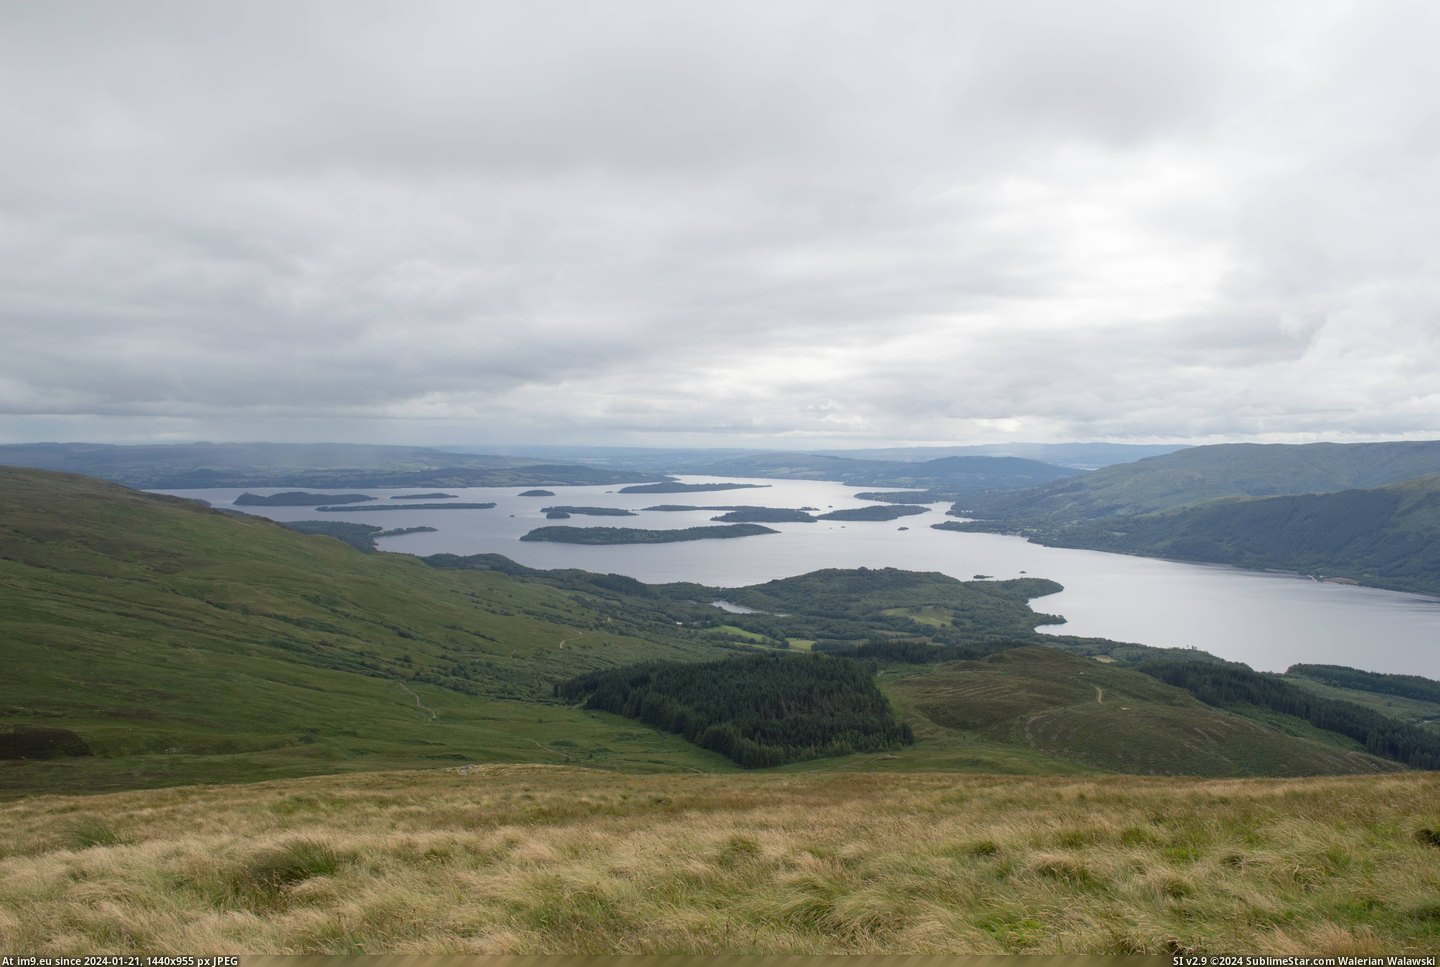 #Scotland #Ben #Loch #Summit [Earthporn] Loch Lomond from the summit of Ben Lomond, Scotland. [6016x4000] Pic. (Изображение из альбом My r/EARTHPORN favs))